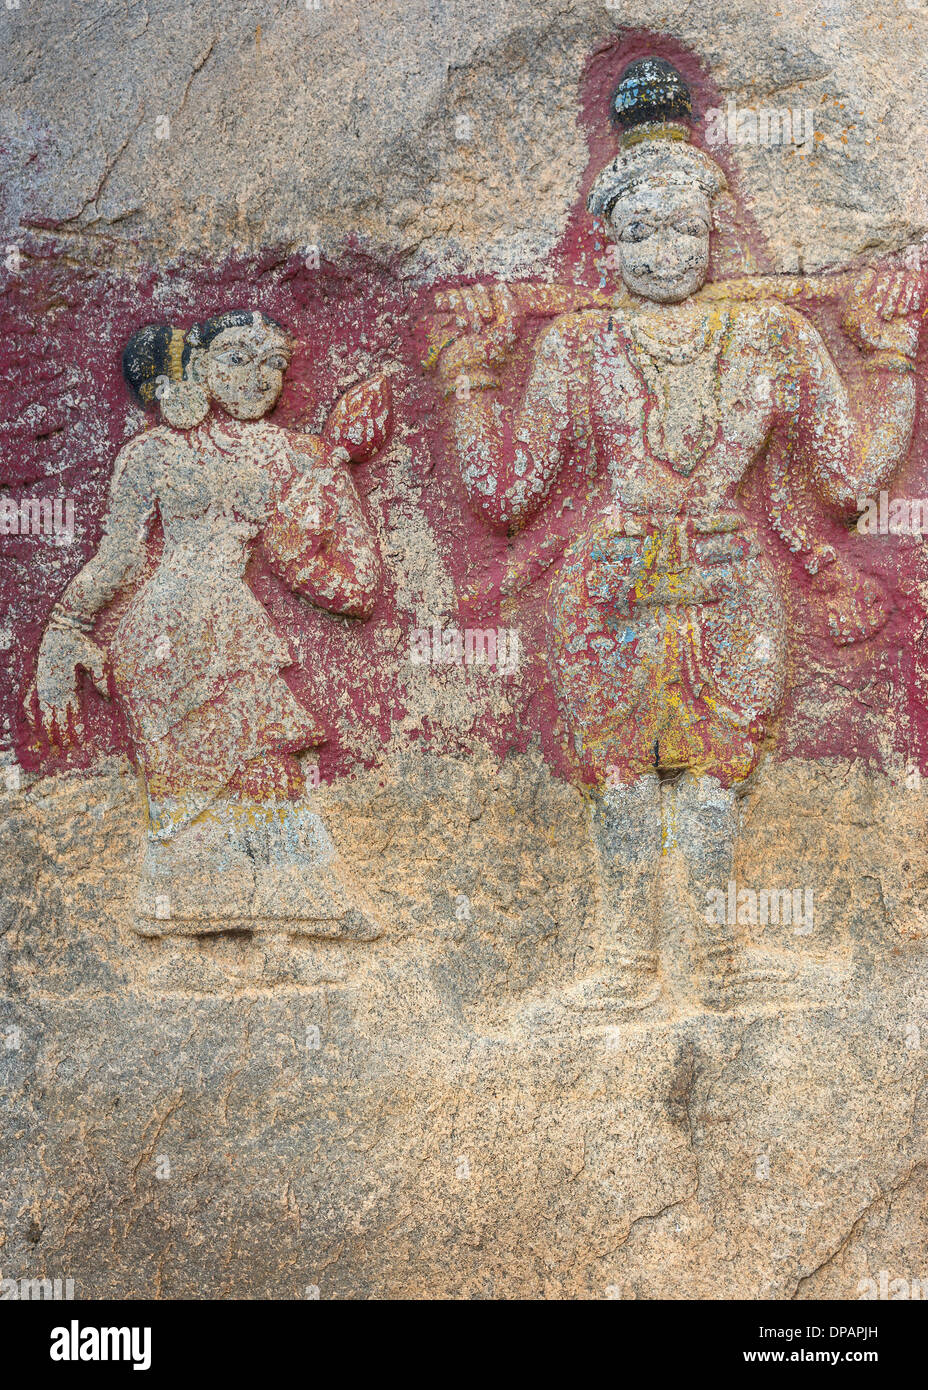 Millennium-old slab of rock with decoration at Sri Naheshwara in Bangalore. Worn off colors remain. Stock Photo